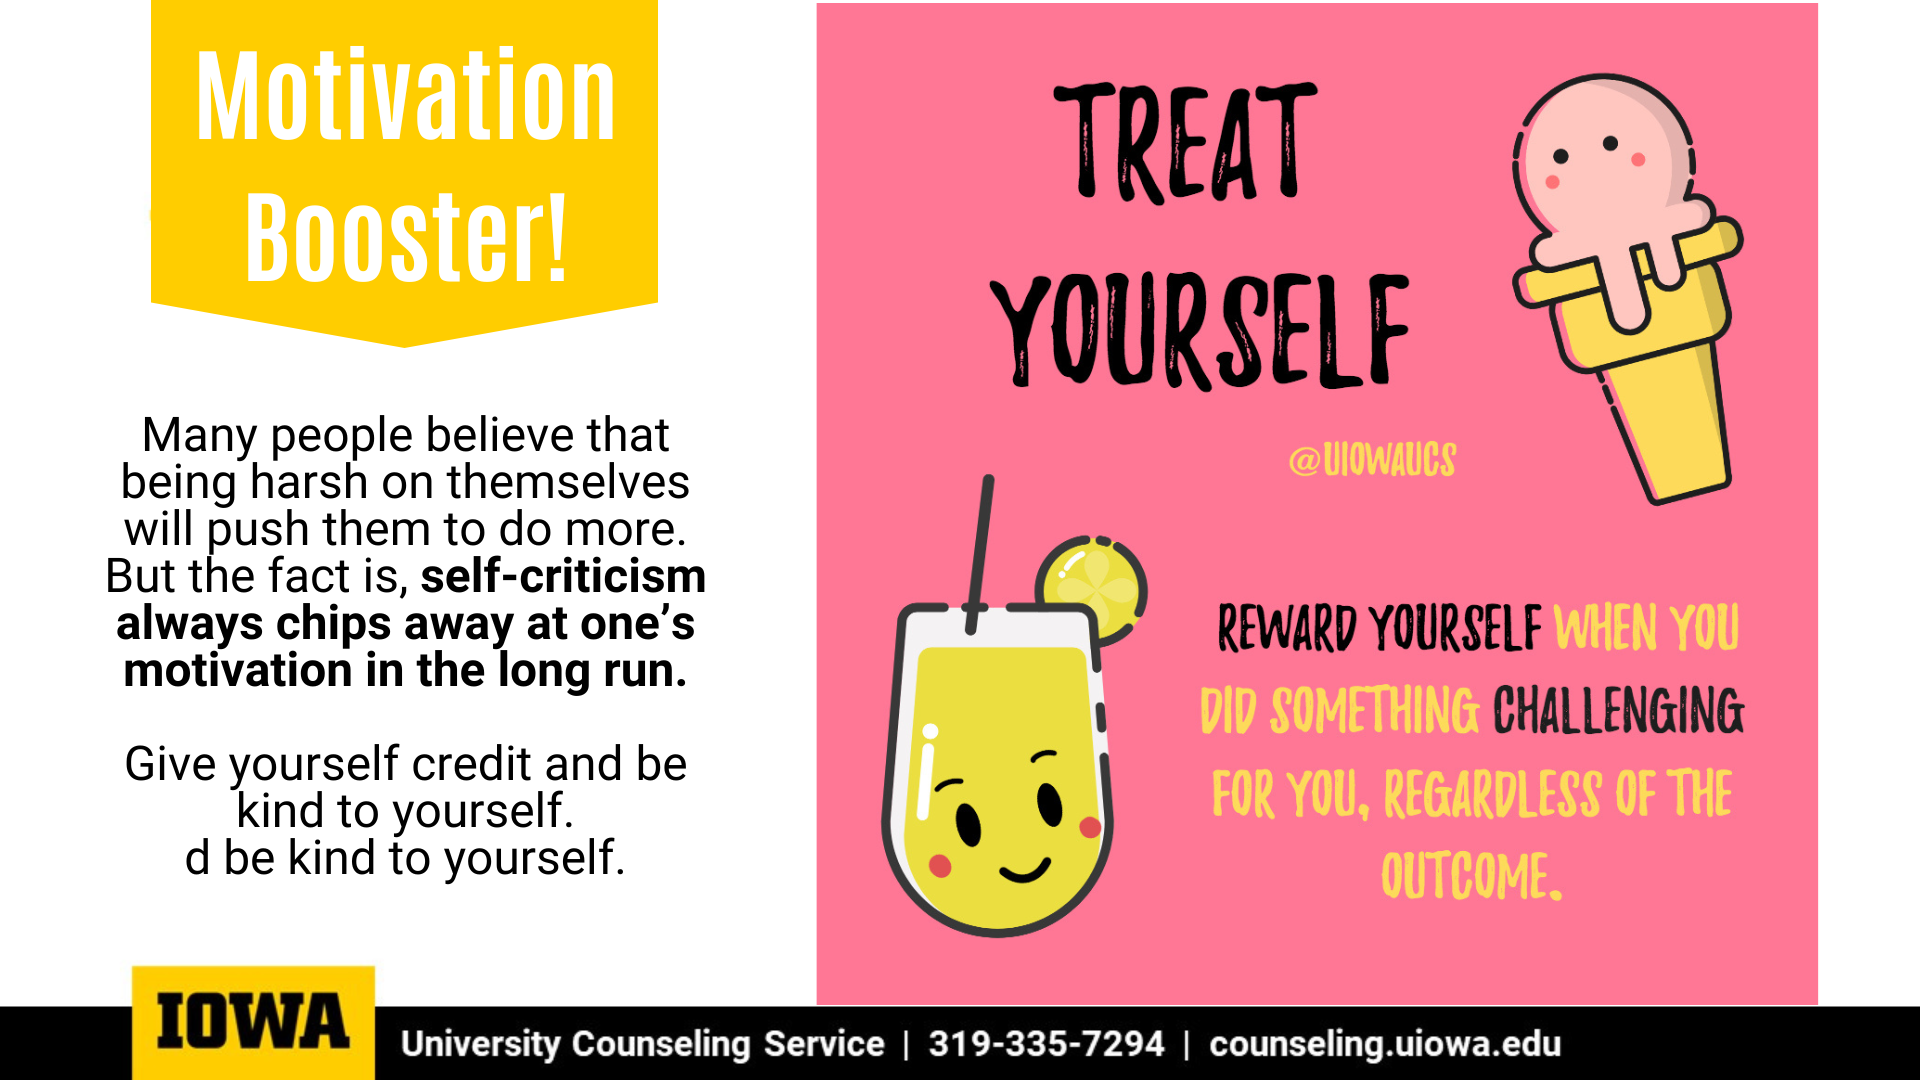 University Counseling Service - Treat Yourself